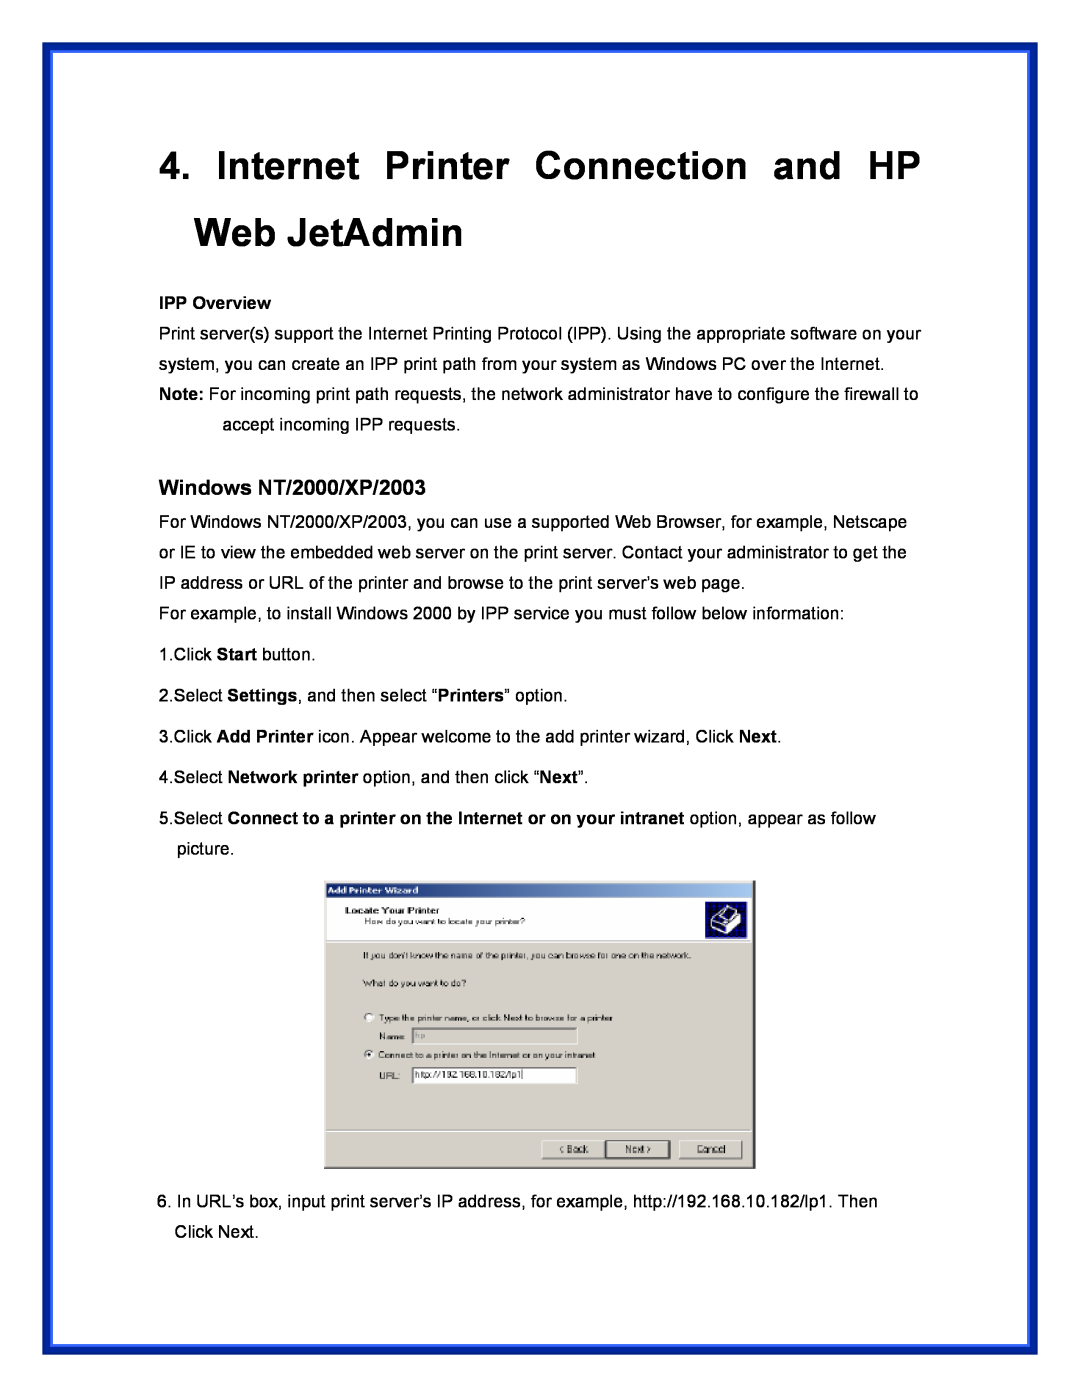 Epson (USB 2.0) user manual Internet Printer Connection and HP Web JetAdmin, Windows NT/2000/XP/2003, IPP Overview 